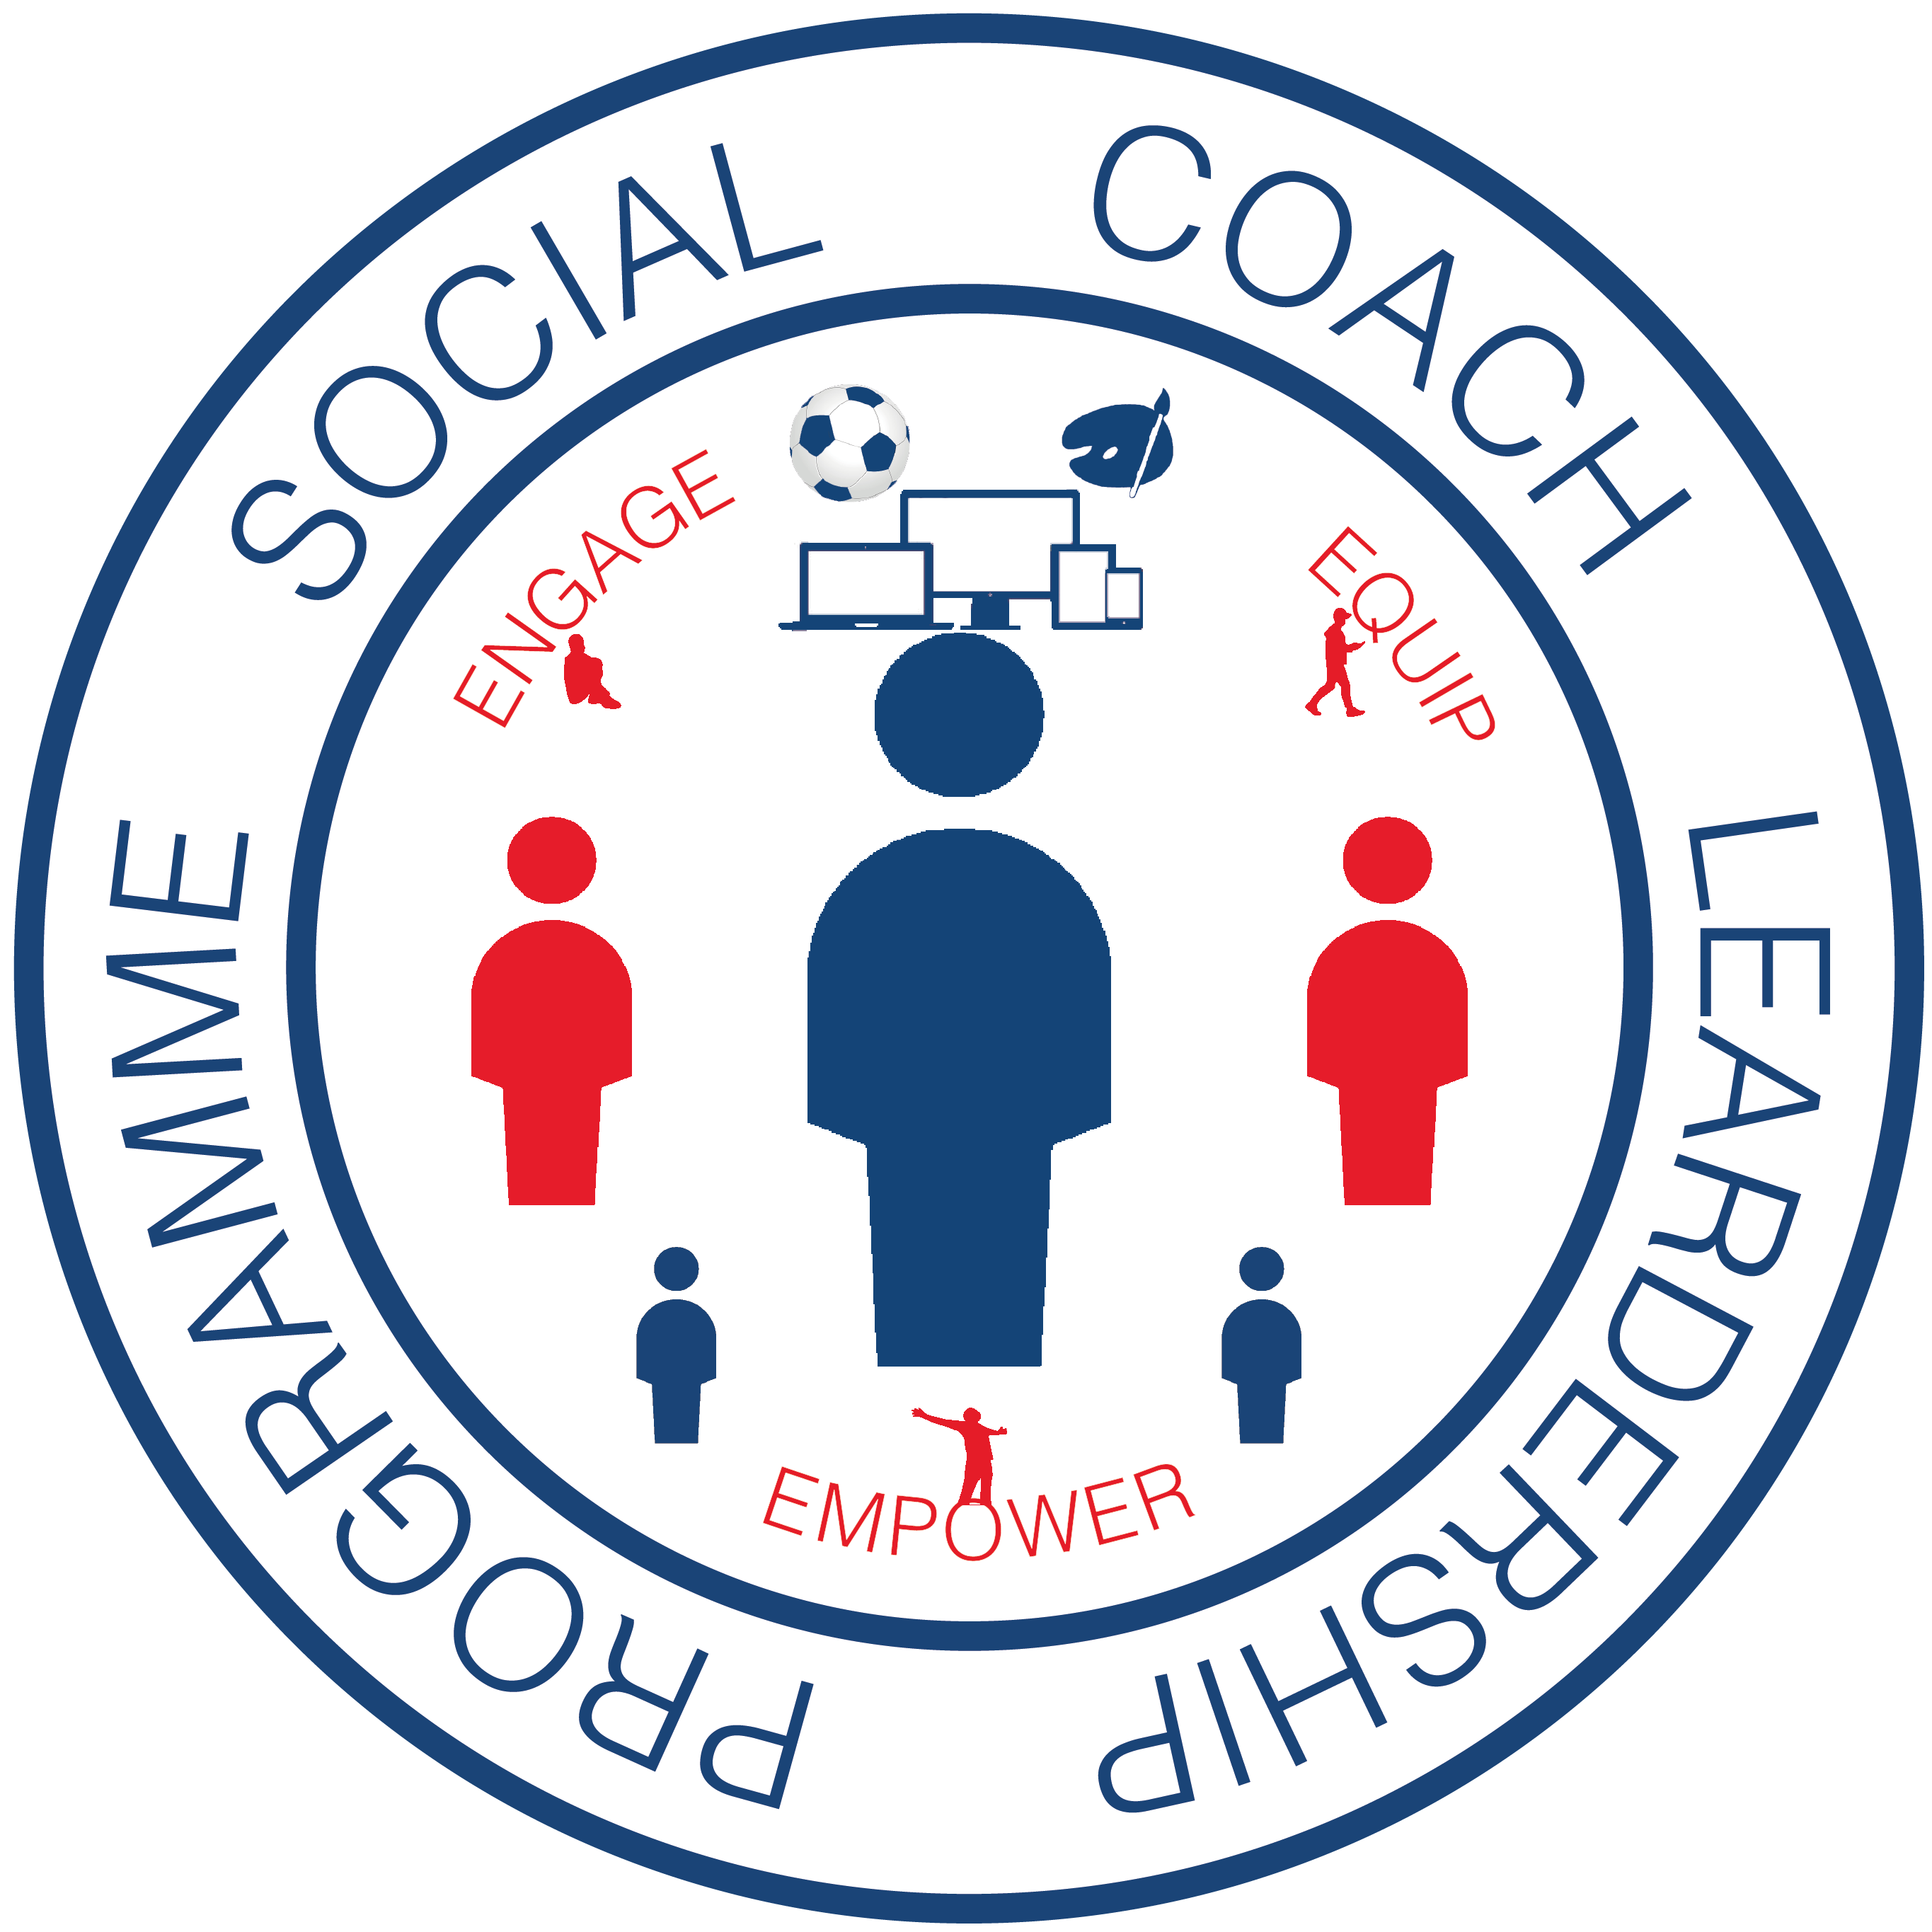 Social Coach Leadership Programme